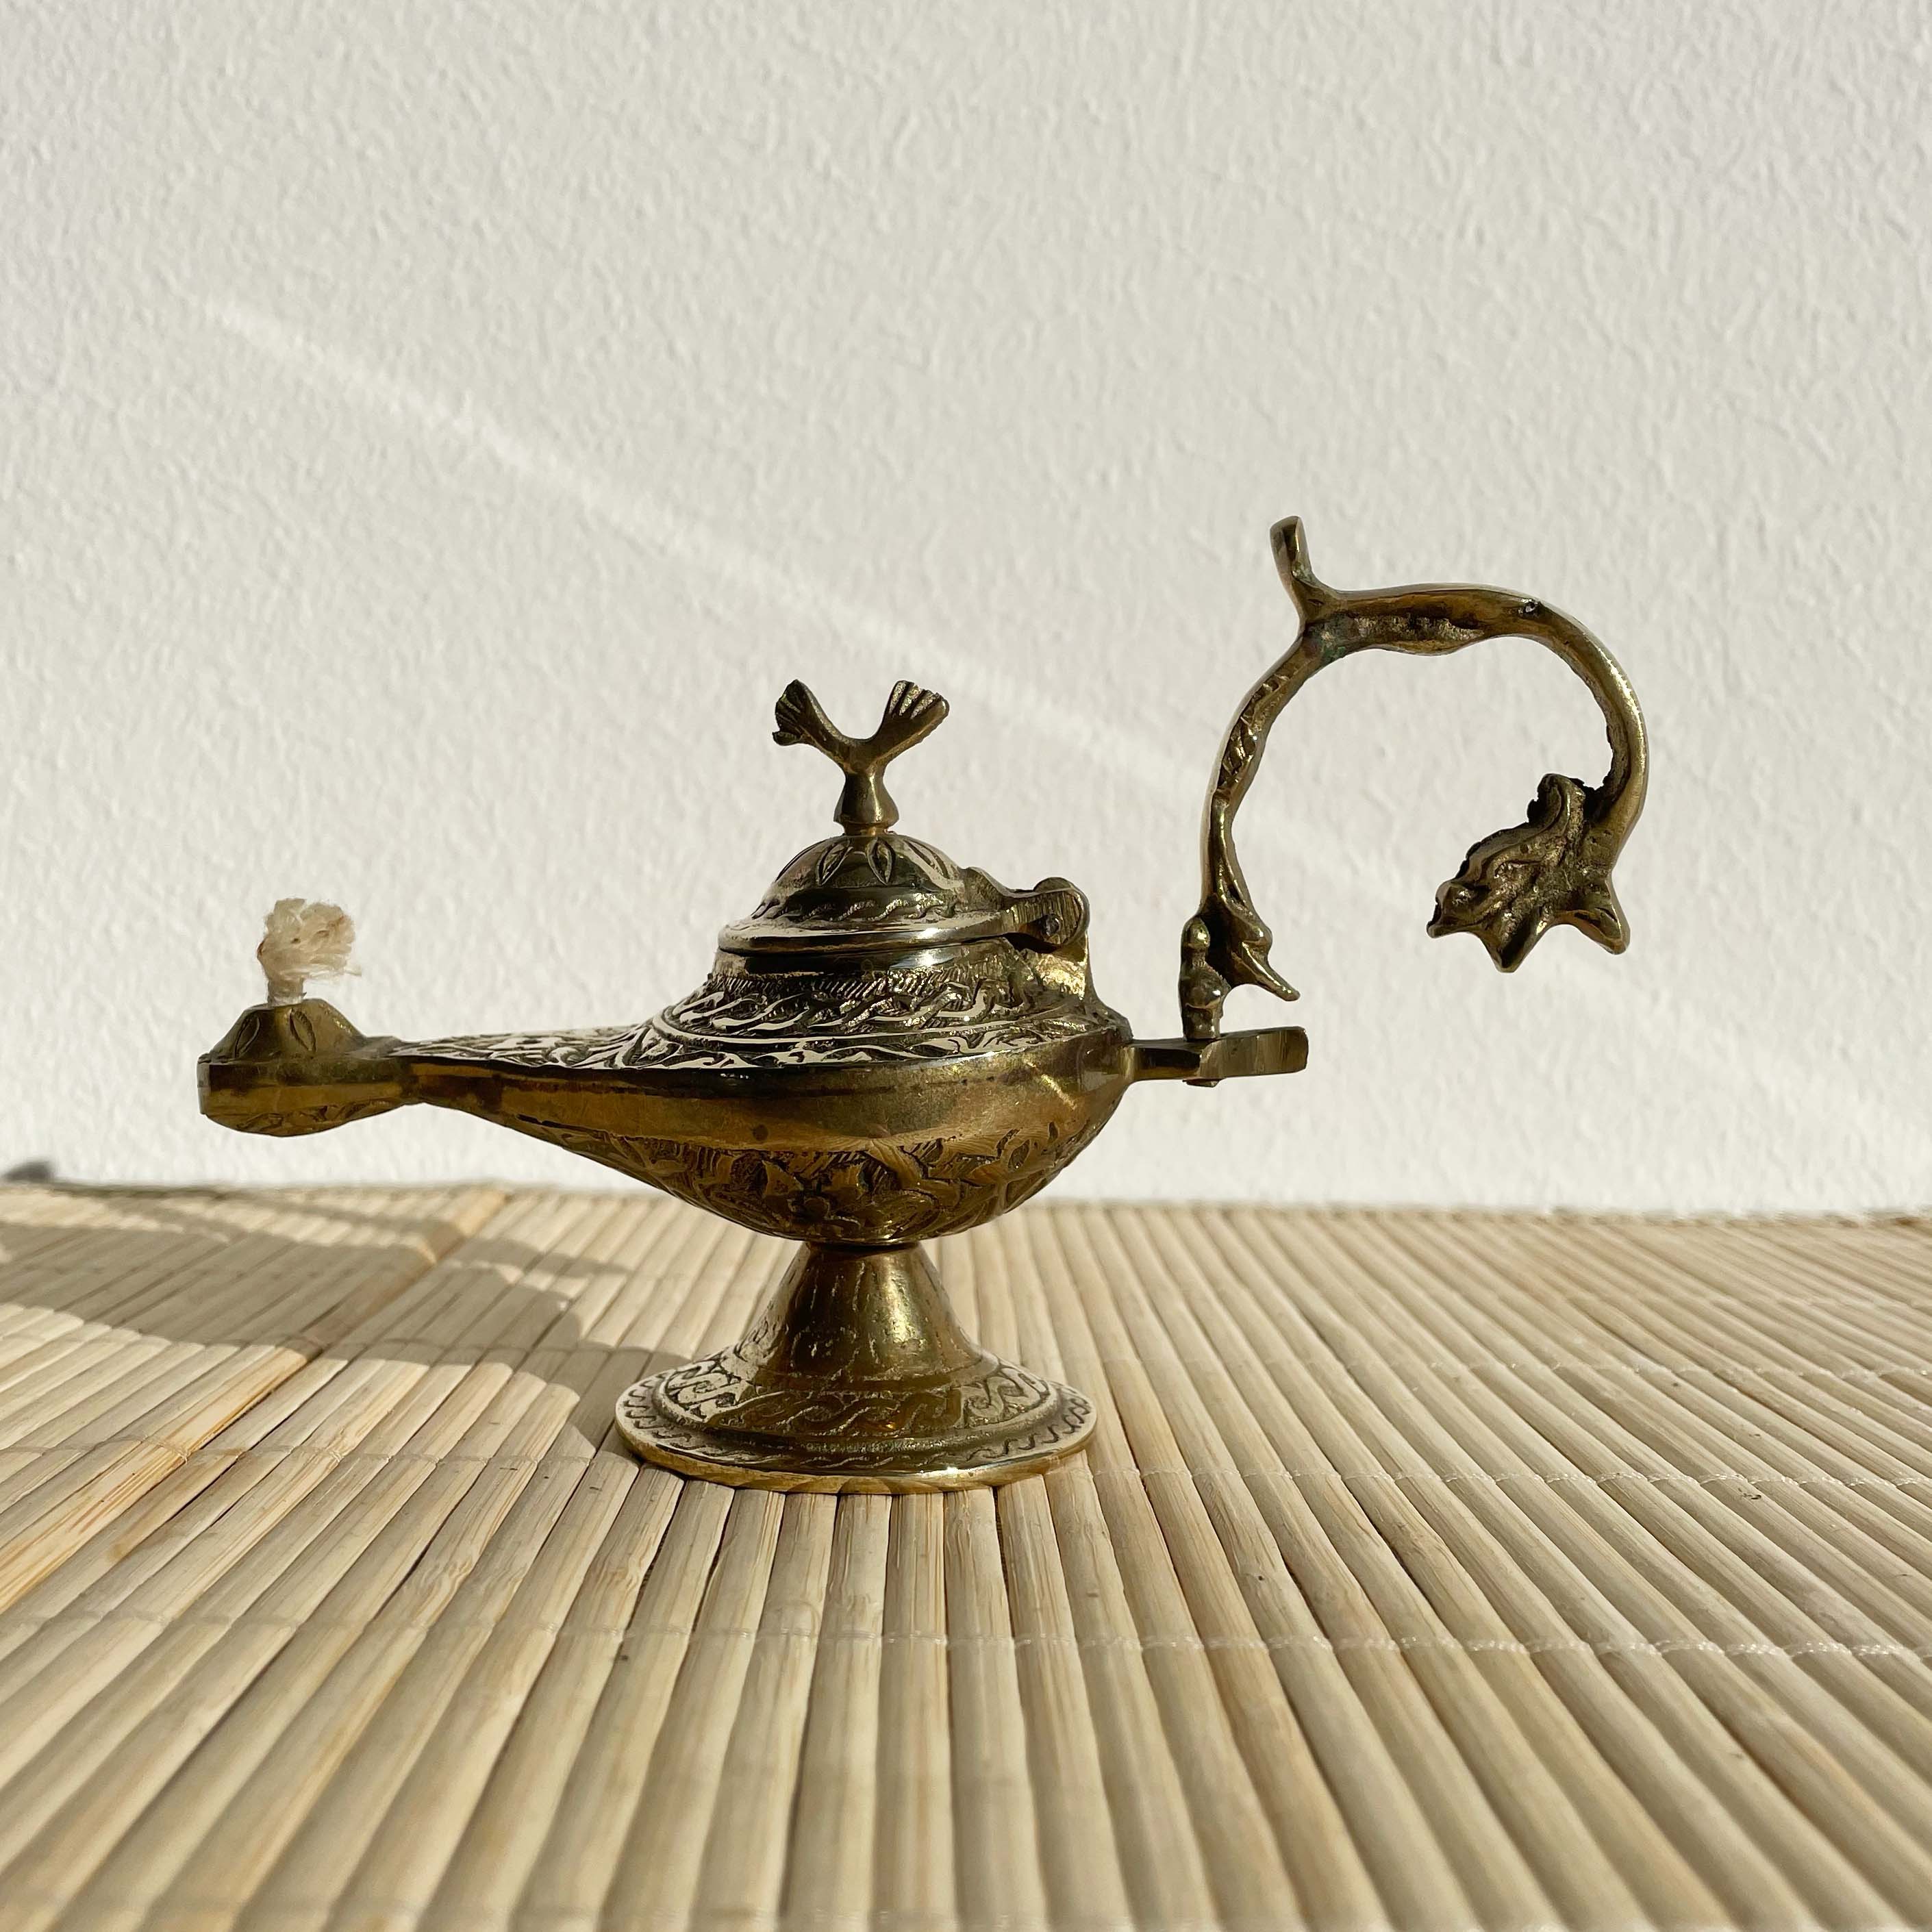 Middle Eastern Brads oil lamp that looks like a magic Genie lamp. HX